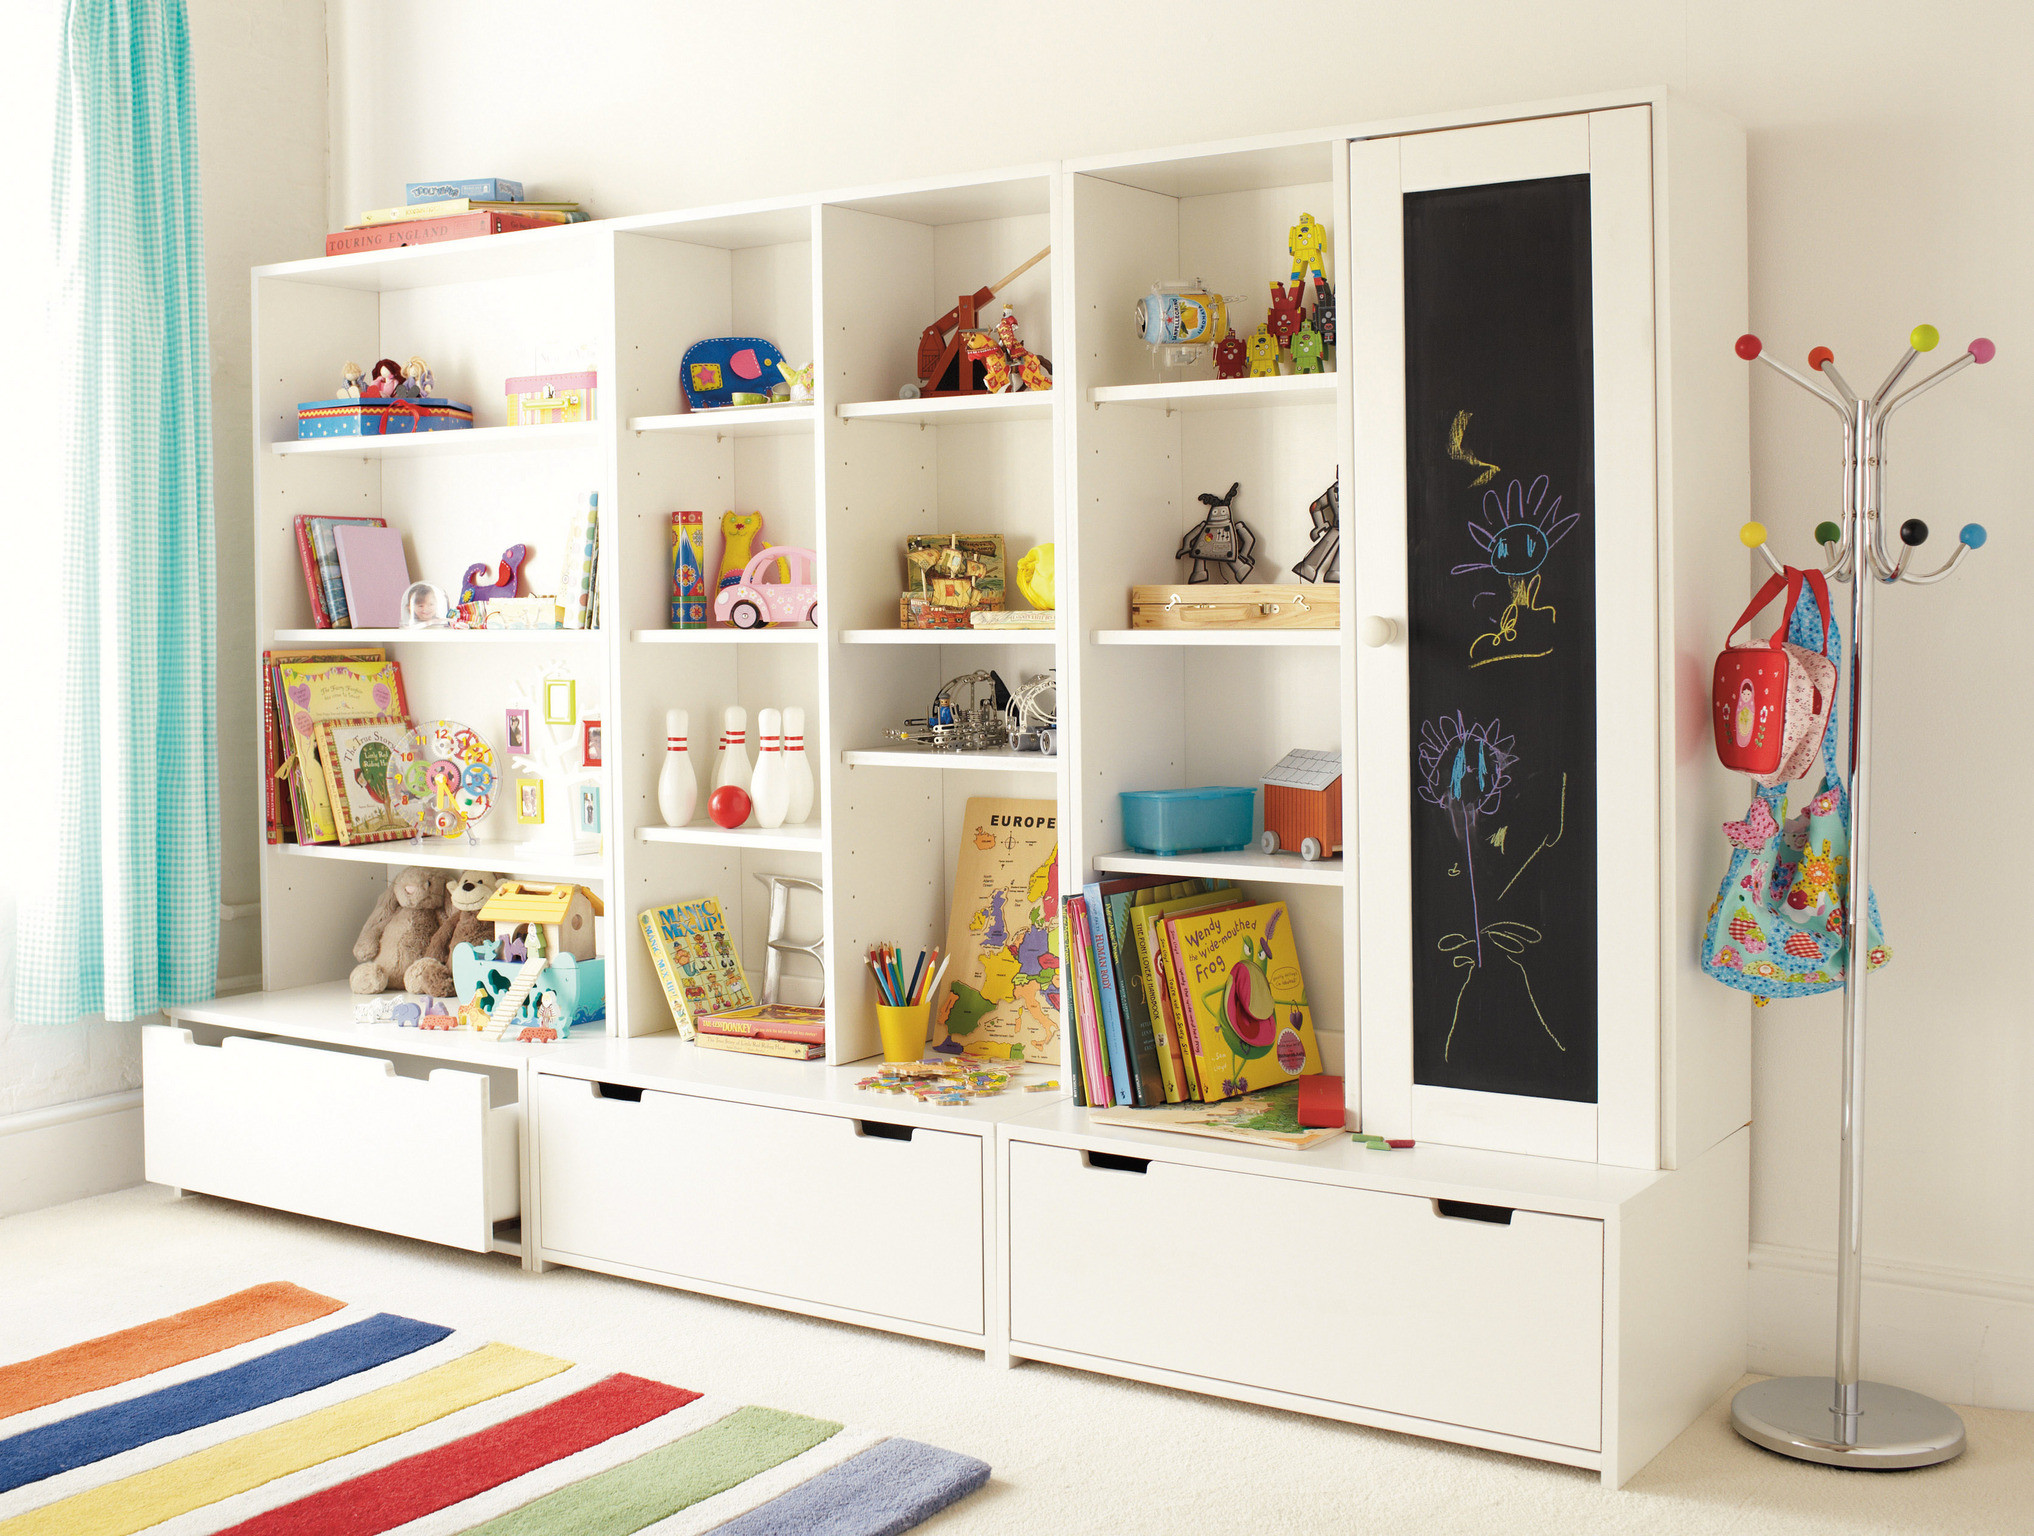 Kids Bedroom Storage
 Most Precise Children’s Playroom Storage Ideas 42 Room